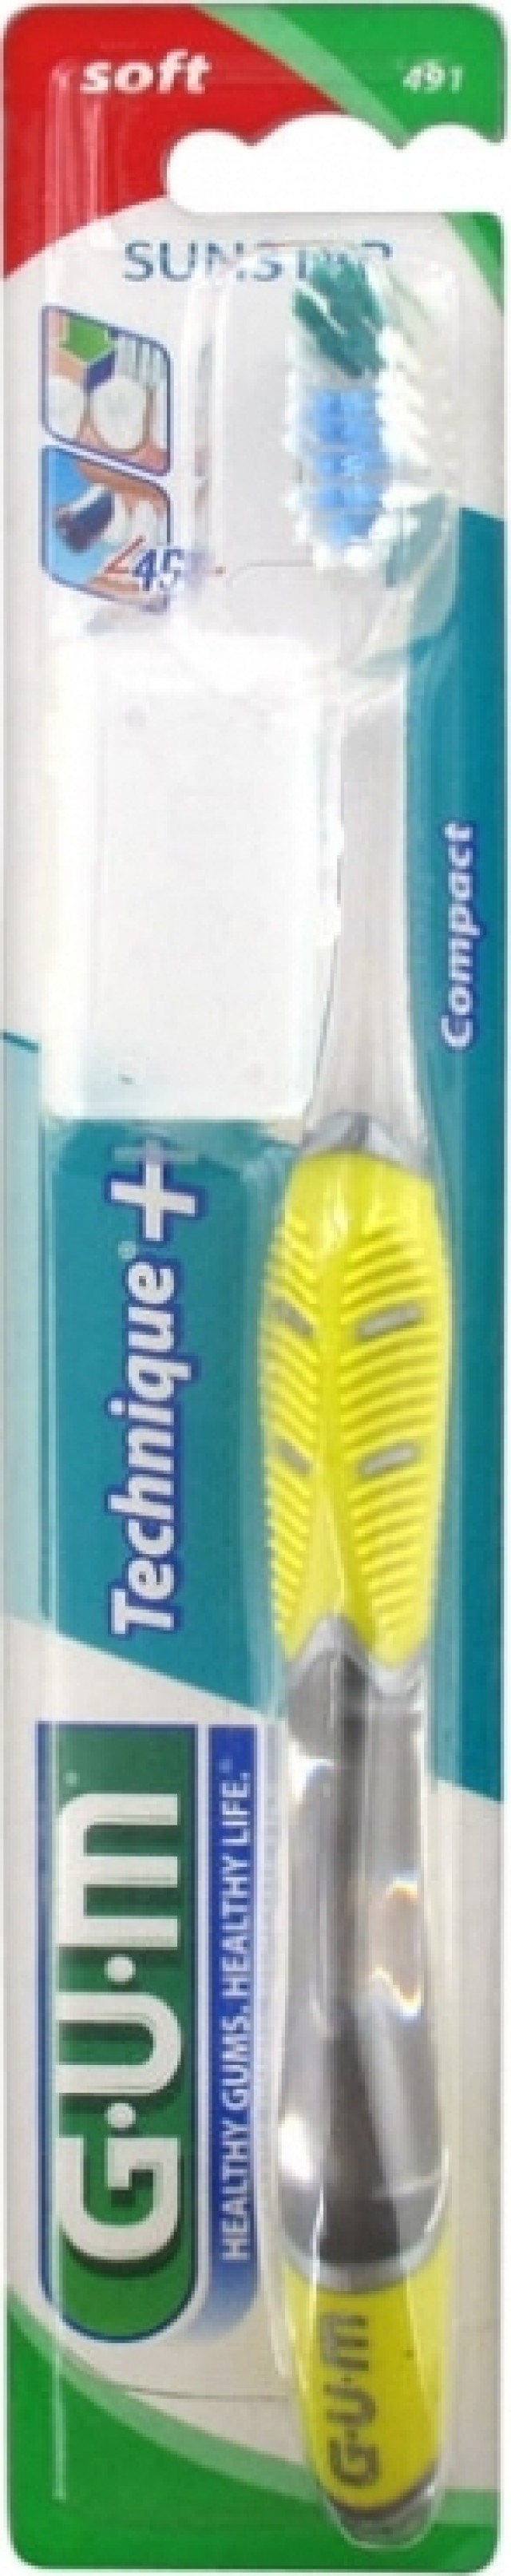 Gum 491 Technique Soft Compact Οδοντόβουρτσα Μαλακή, 1τεμ.